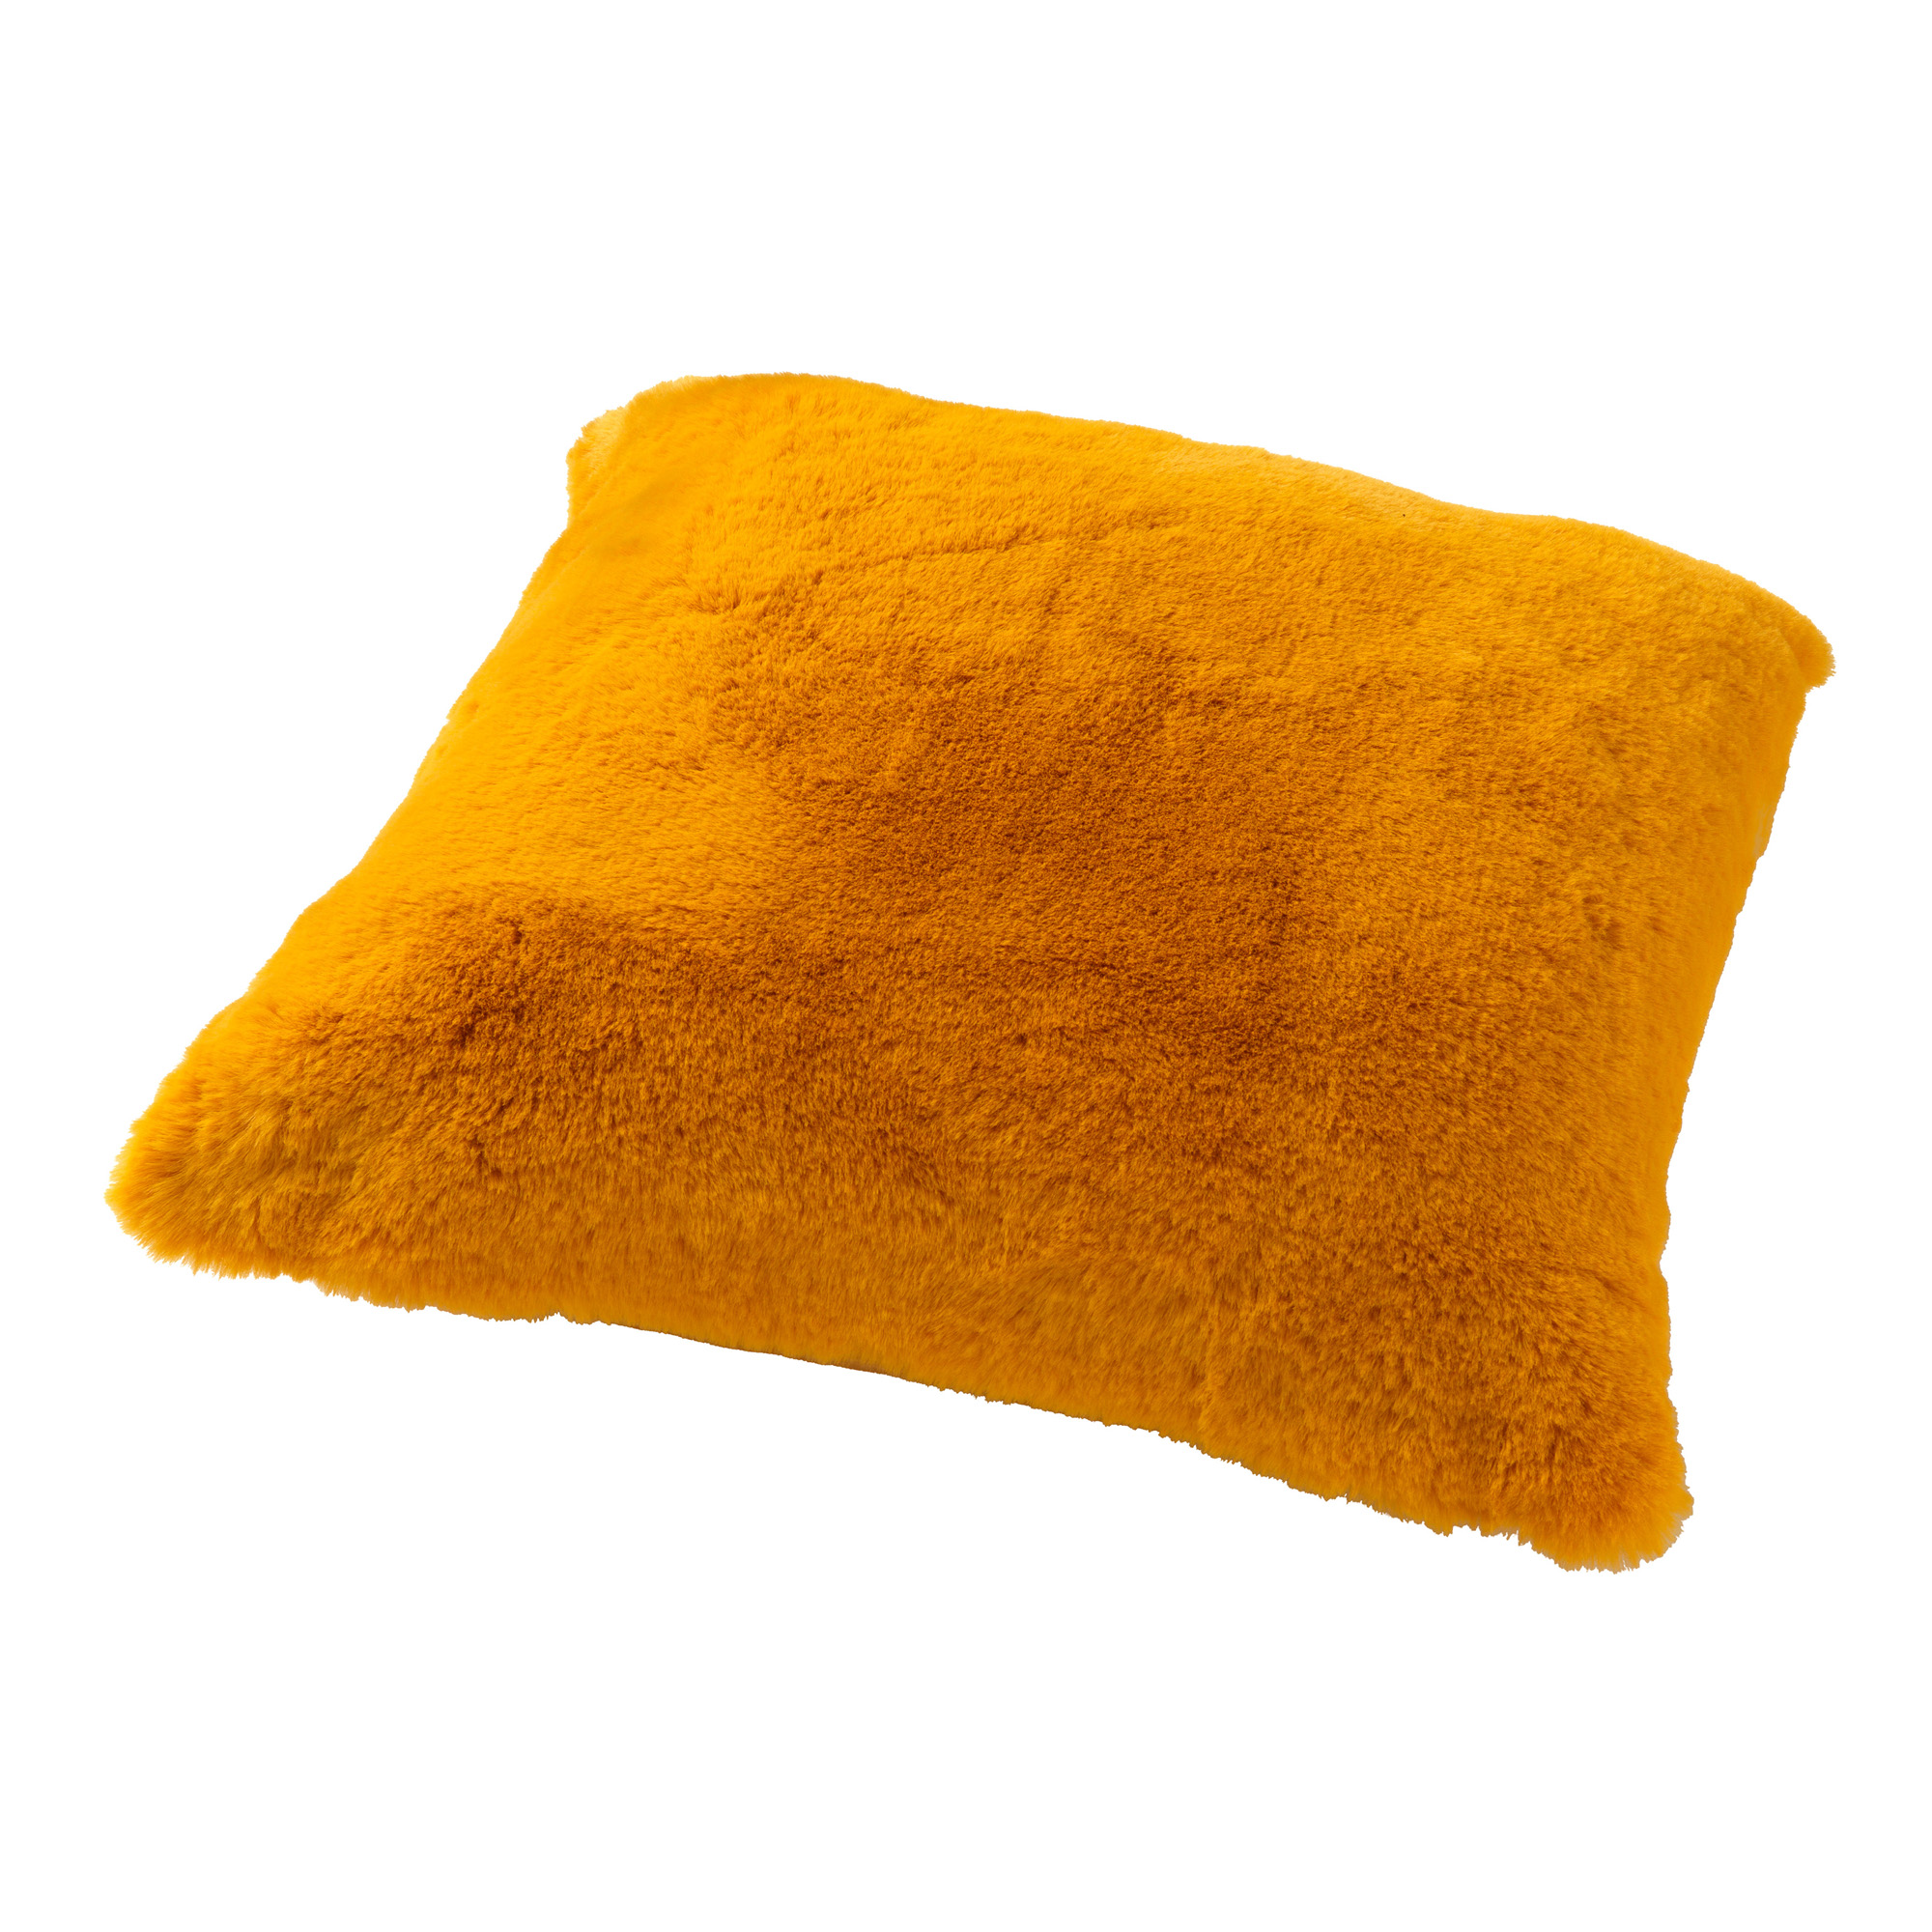 ZAYA - Kussenhoes unikleur 45x45 cm - Golden Glow - geel - superzacht